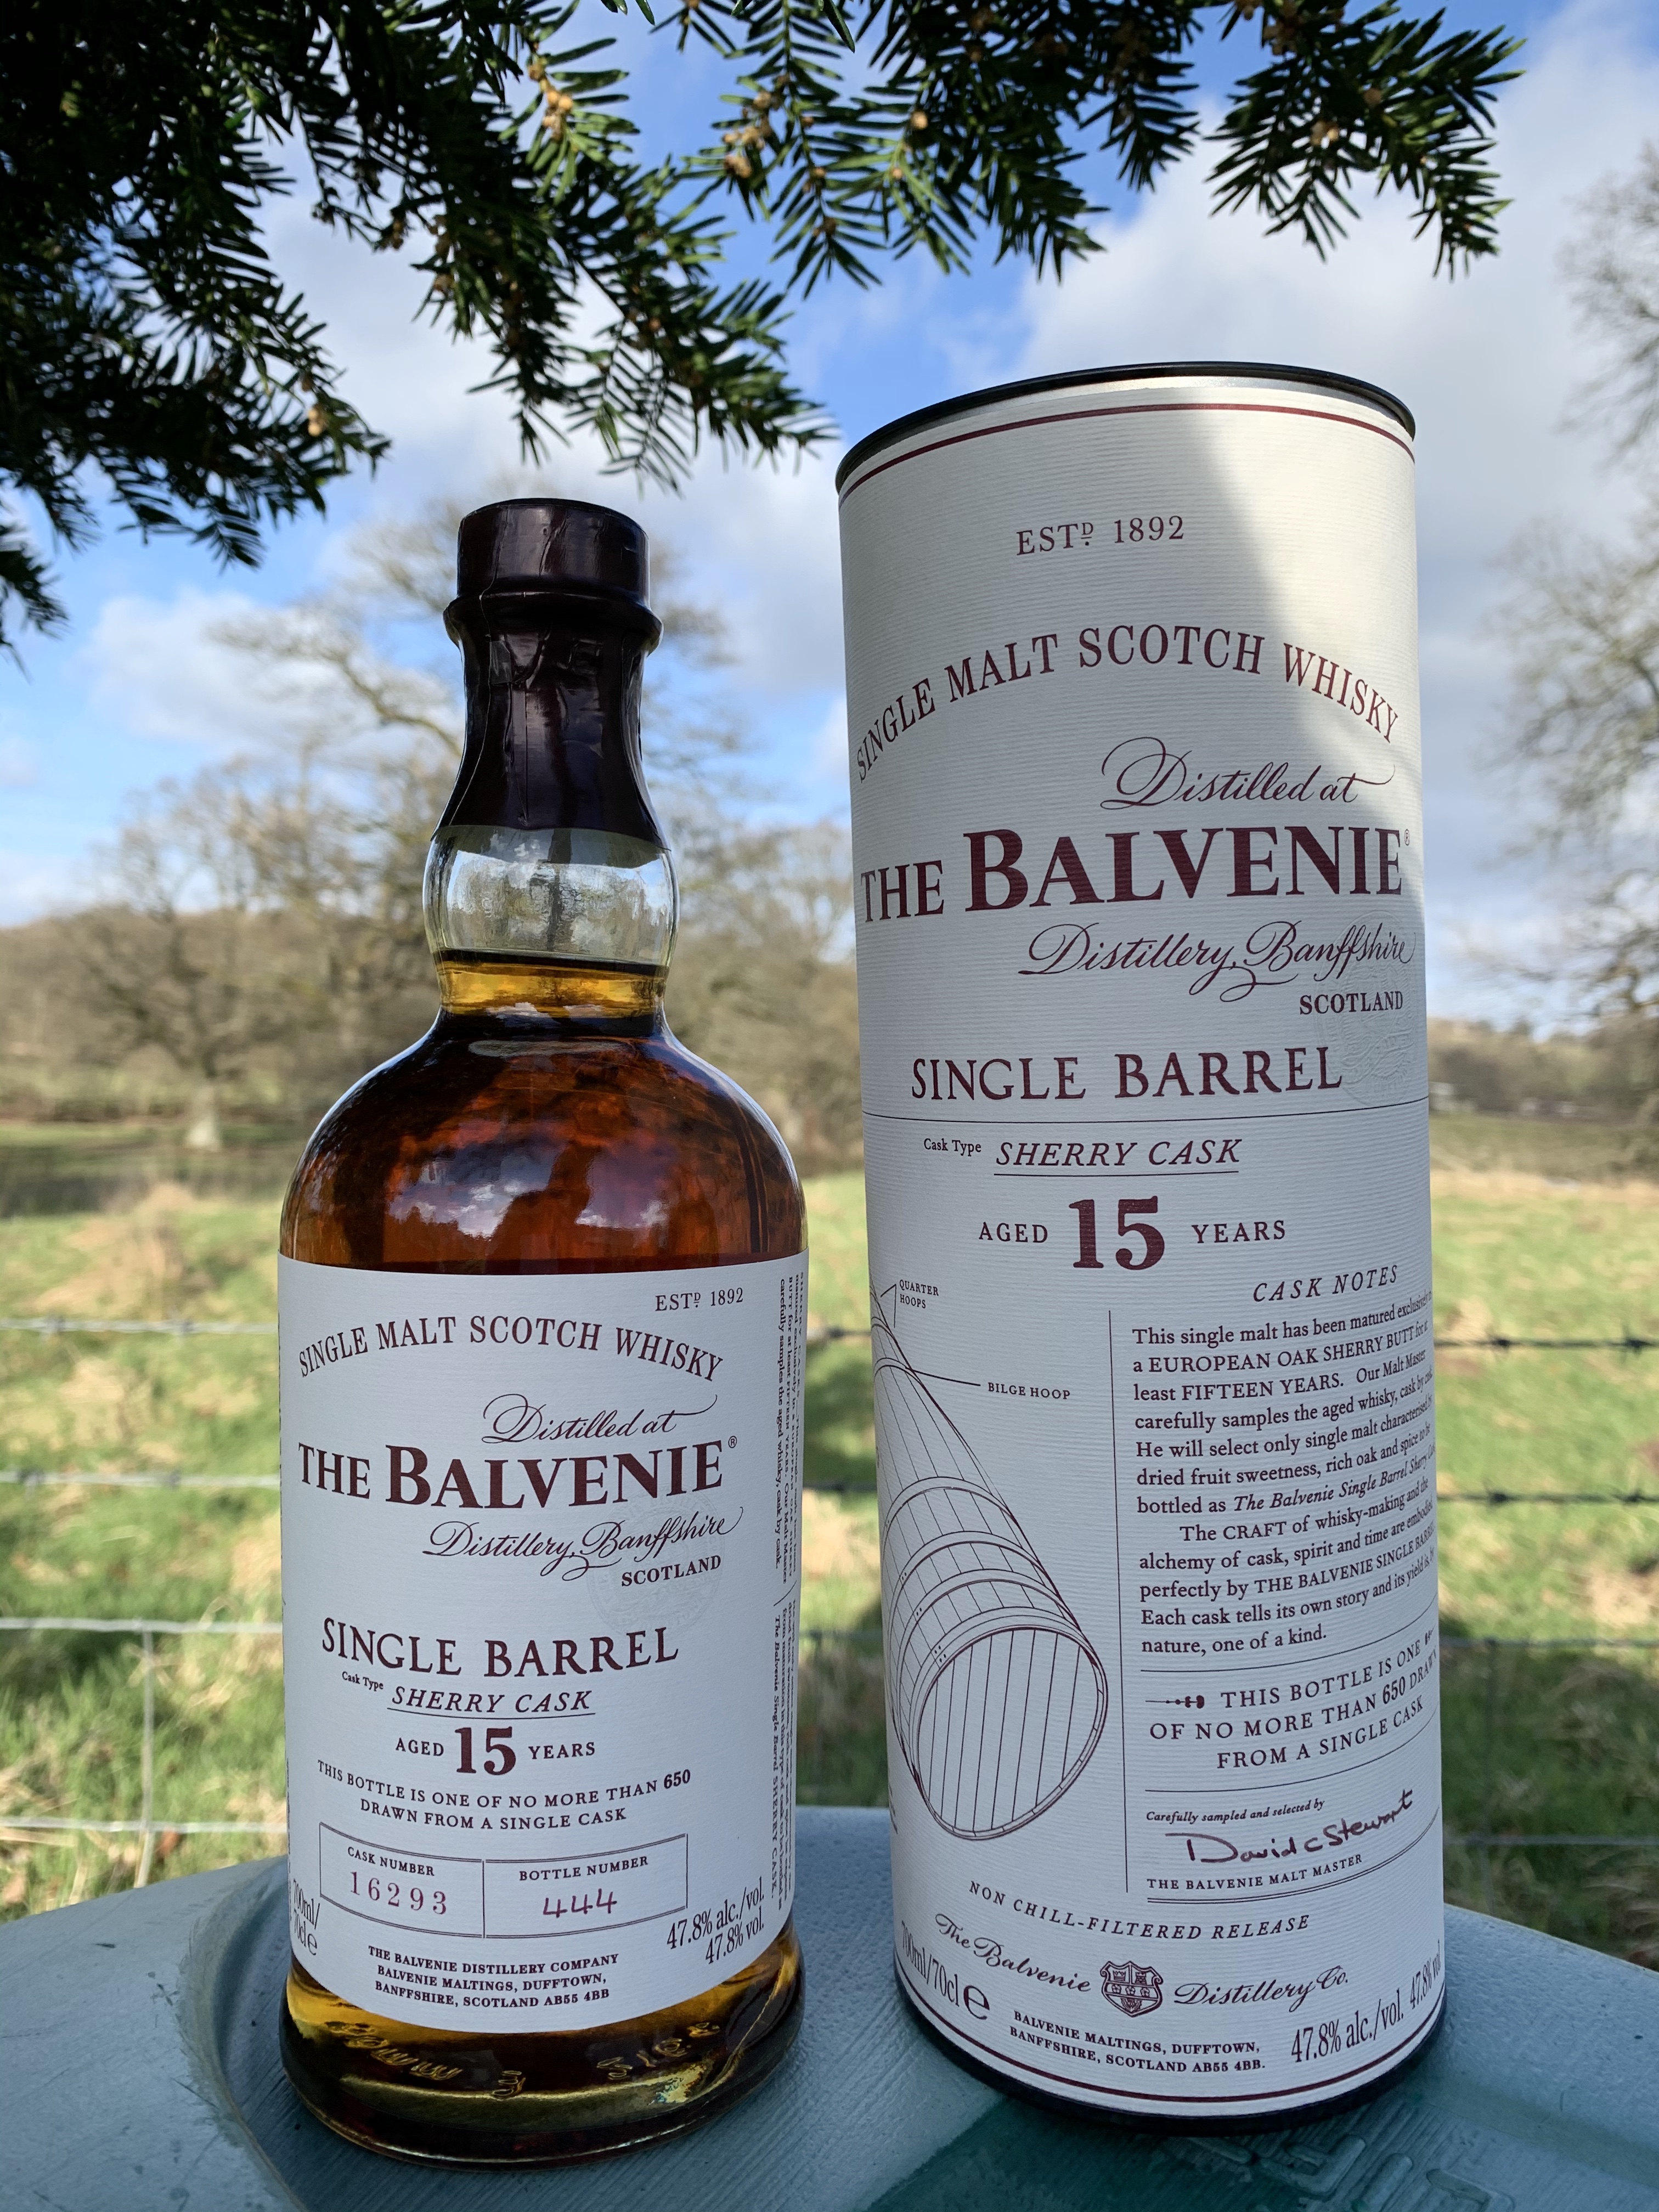 Balvenie single barrel sherry cask